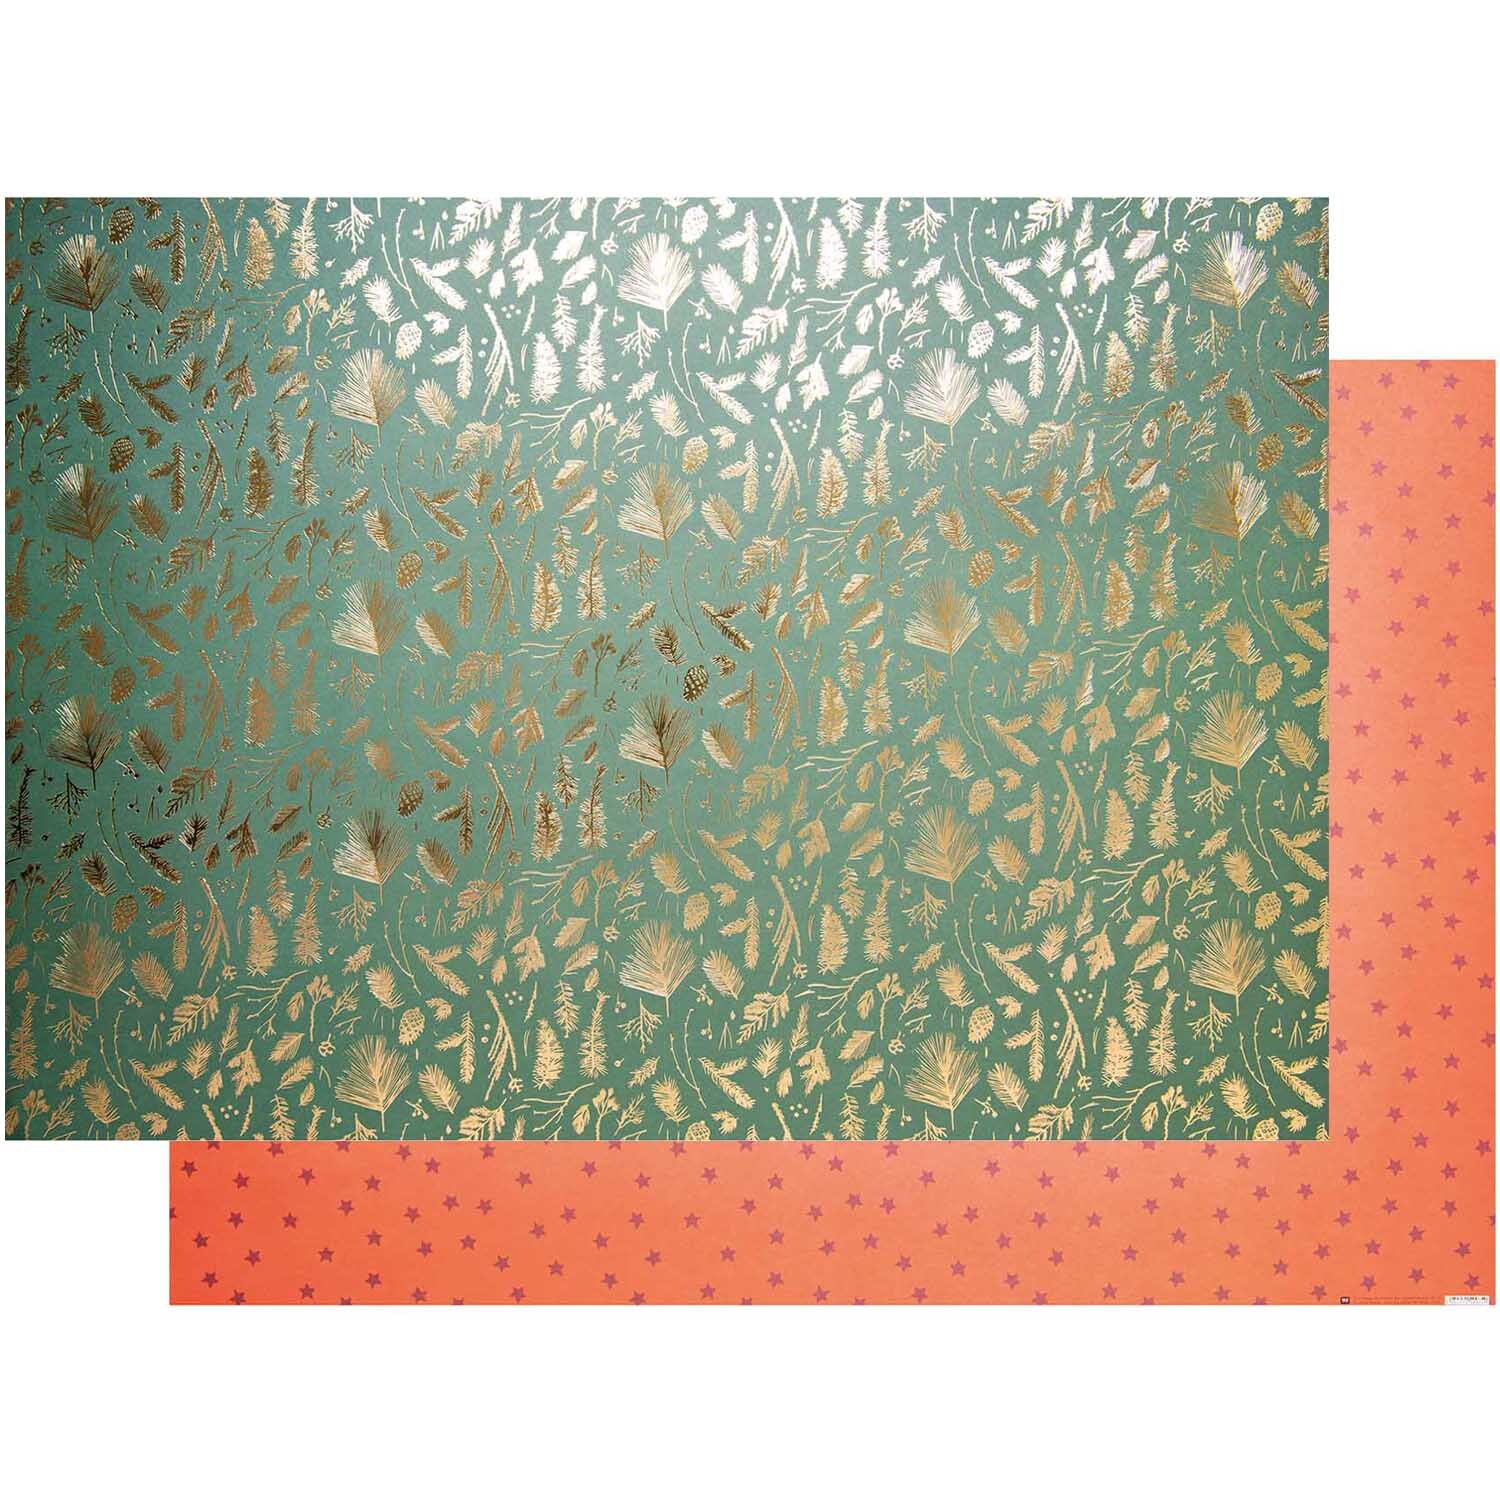 Paper Poetry Motivkarton Nostalgic Christmas Zweige grün-gold 50x70cm